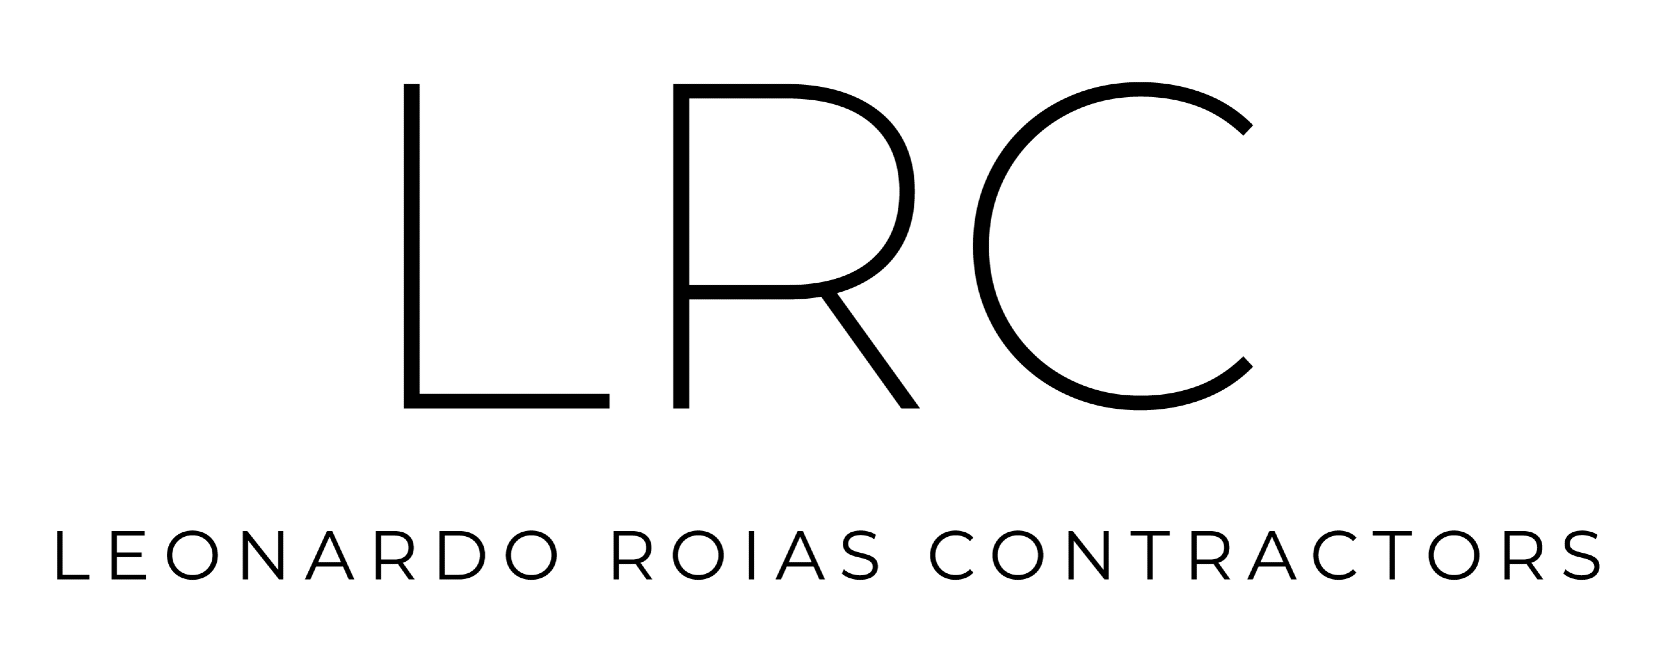 Leonardo Roias Contractors | Logo